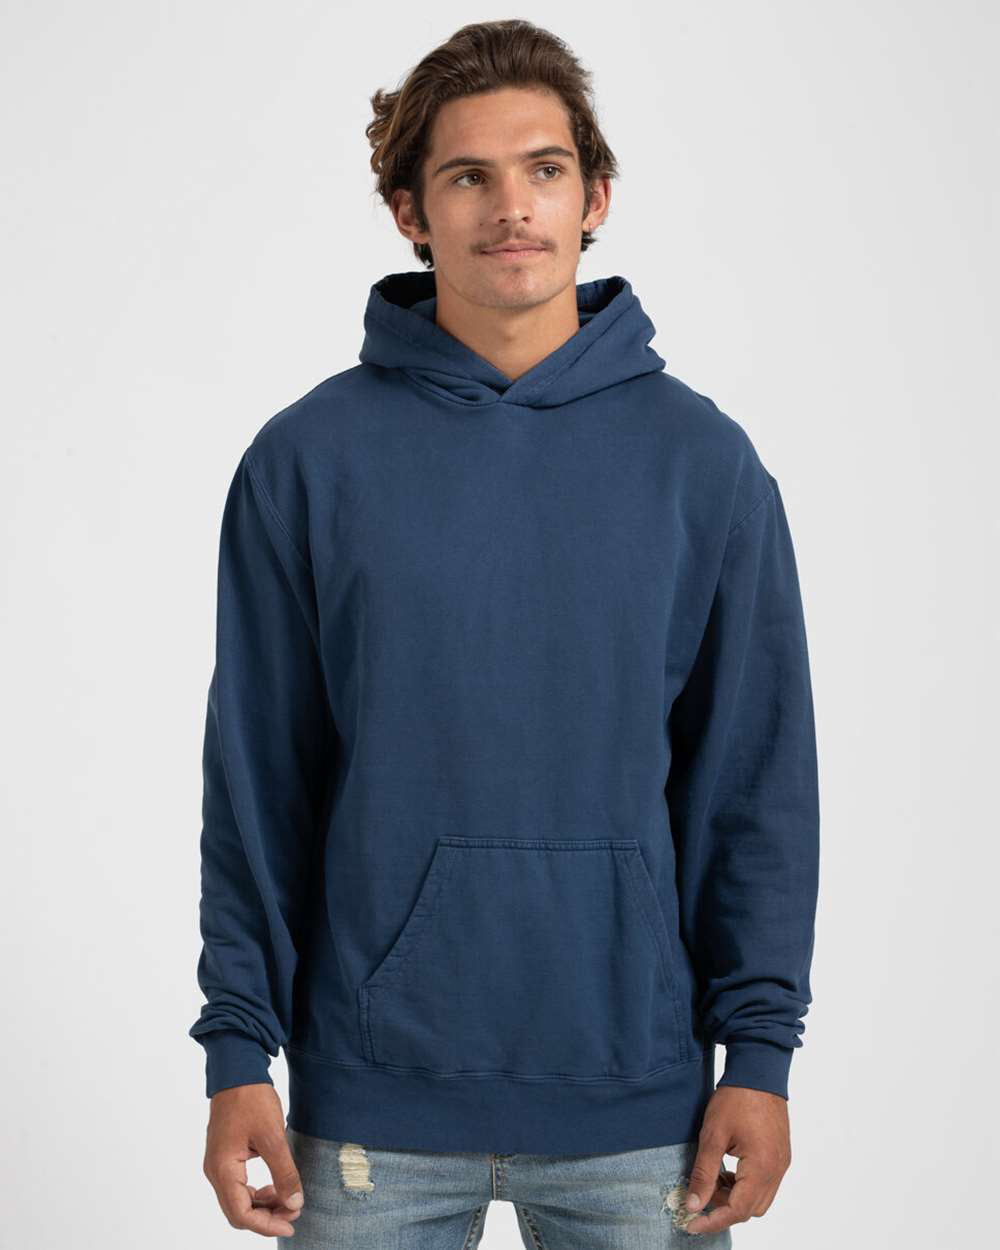 Tultex Heritage Hooded Sweatshirt - Walmart.com